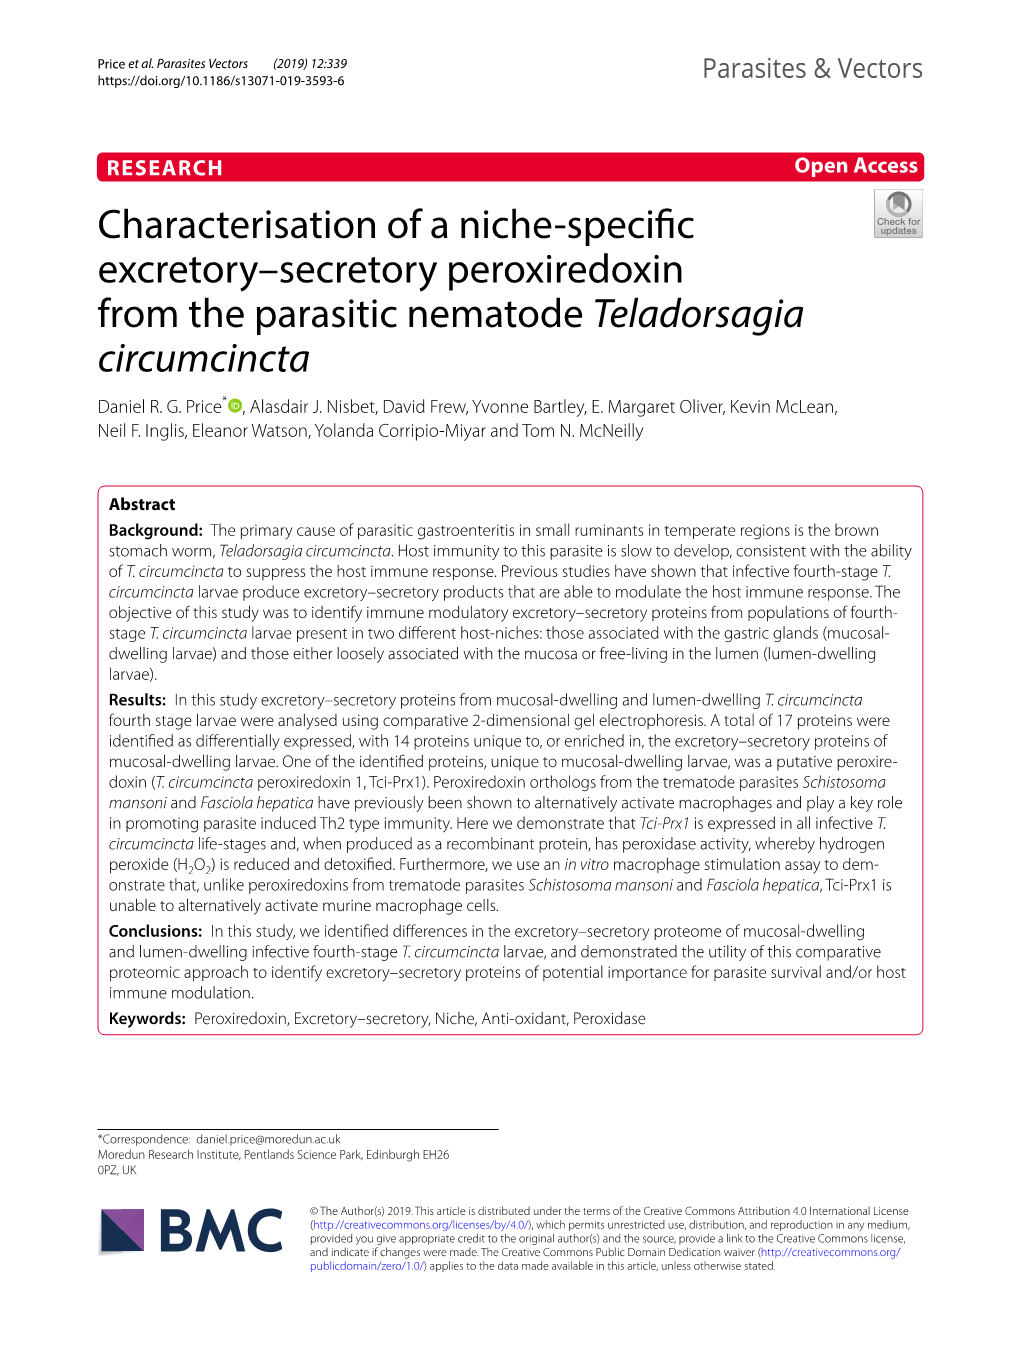 Characterisation of a Niche-Specific Excretory–Secretory Peroxiredoxin